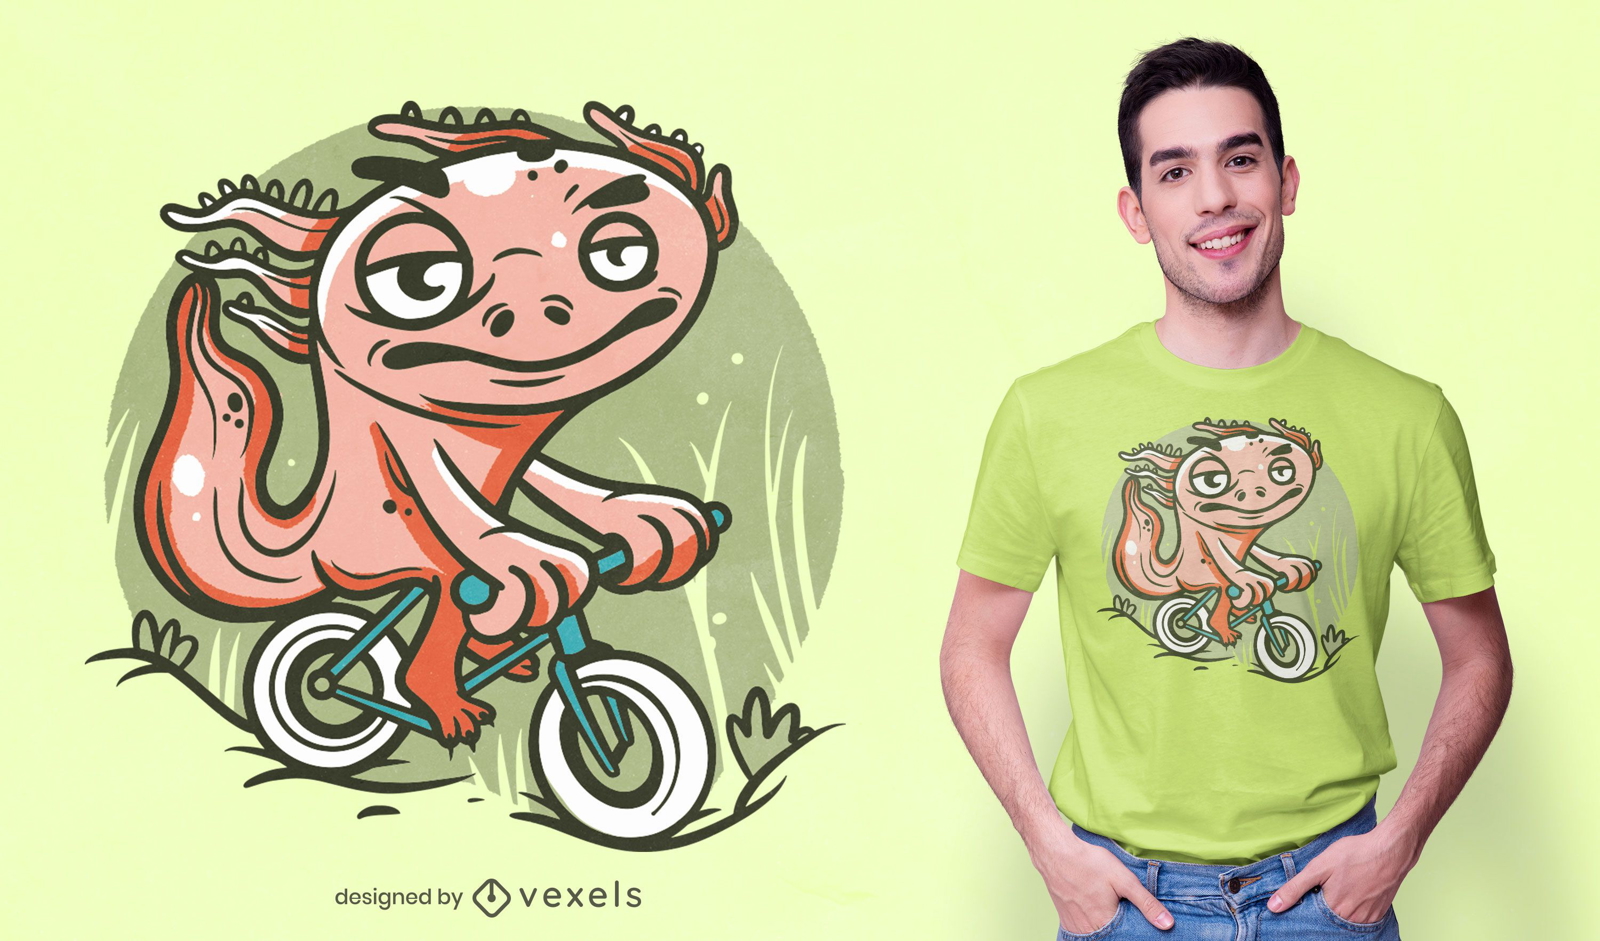 Axolotl riding bike t-shirt design